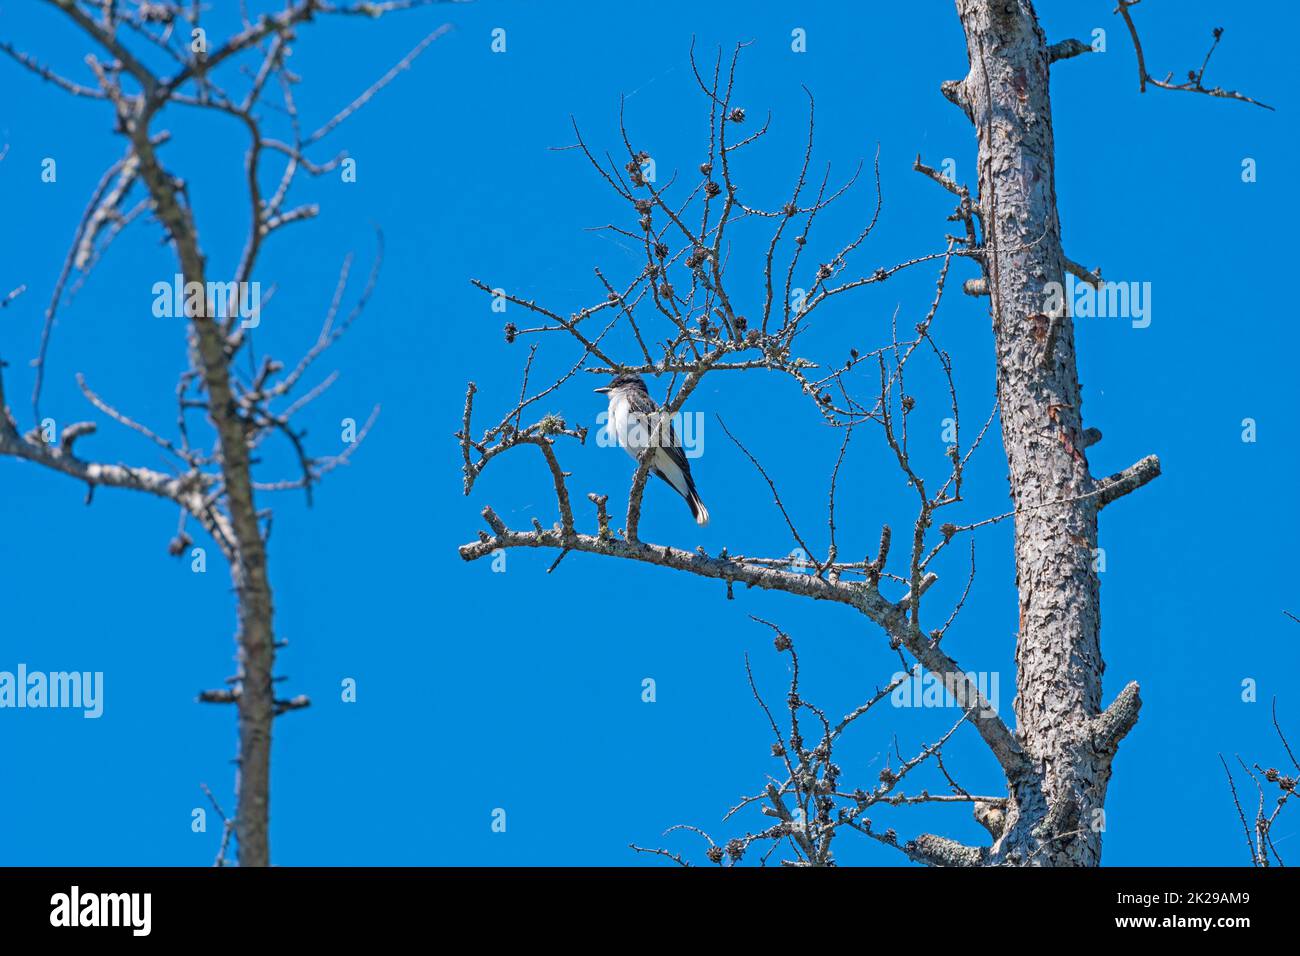 An Eastern Kingbird In a Scraggly Tree Stock Photo